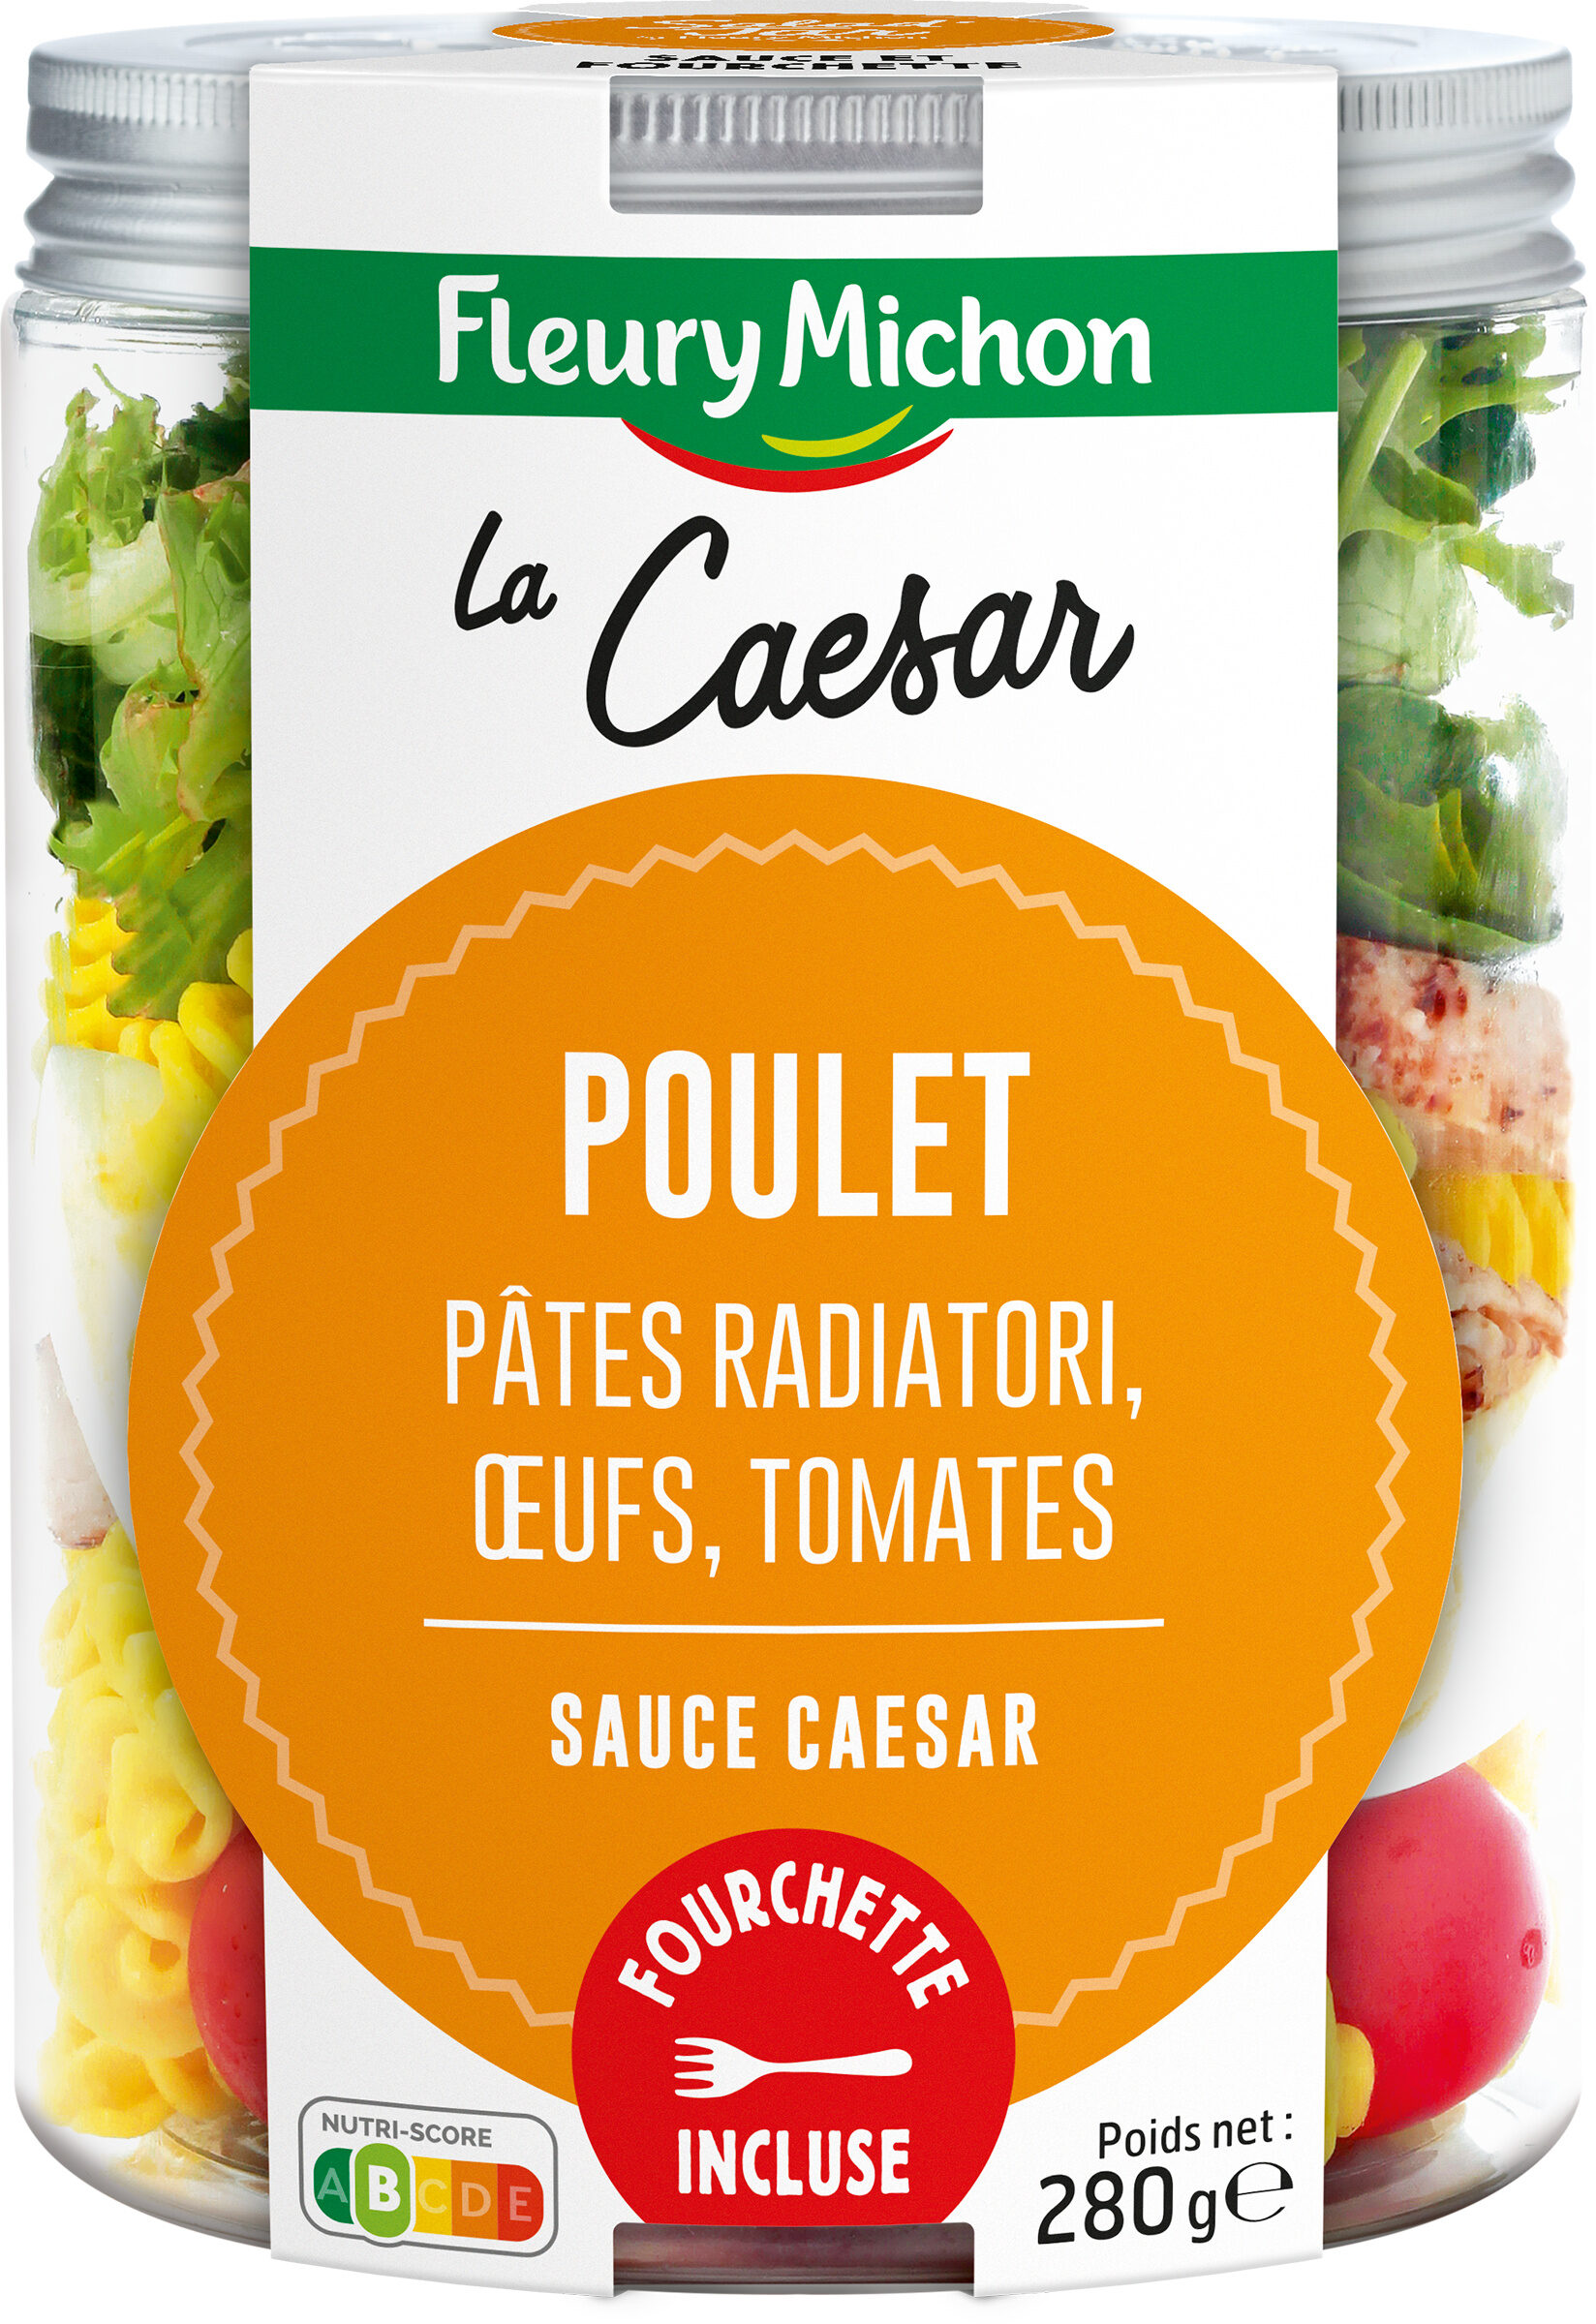 SALAD JAR - La Caesar - Poulet, pâtes radiatori, oeufs, tomates, sauce Caesar - Produit